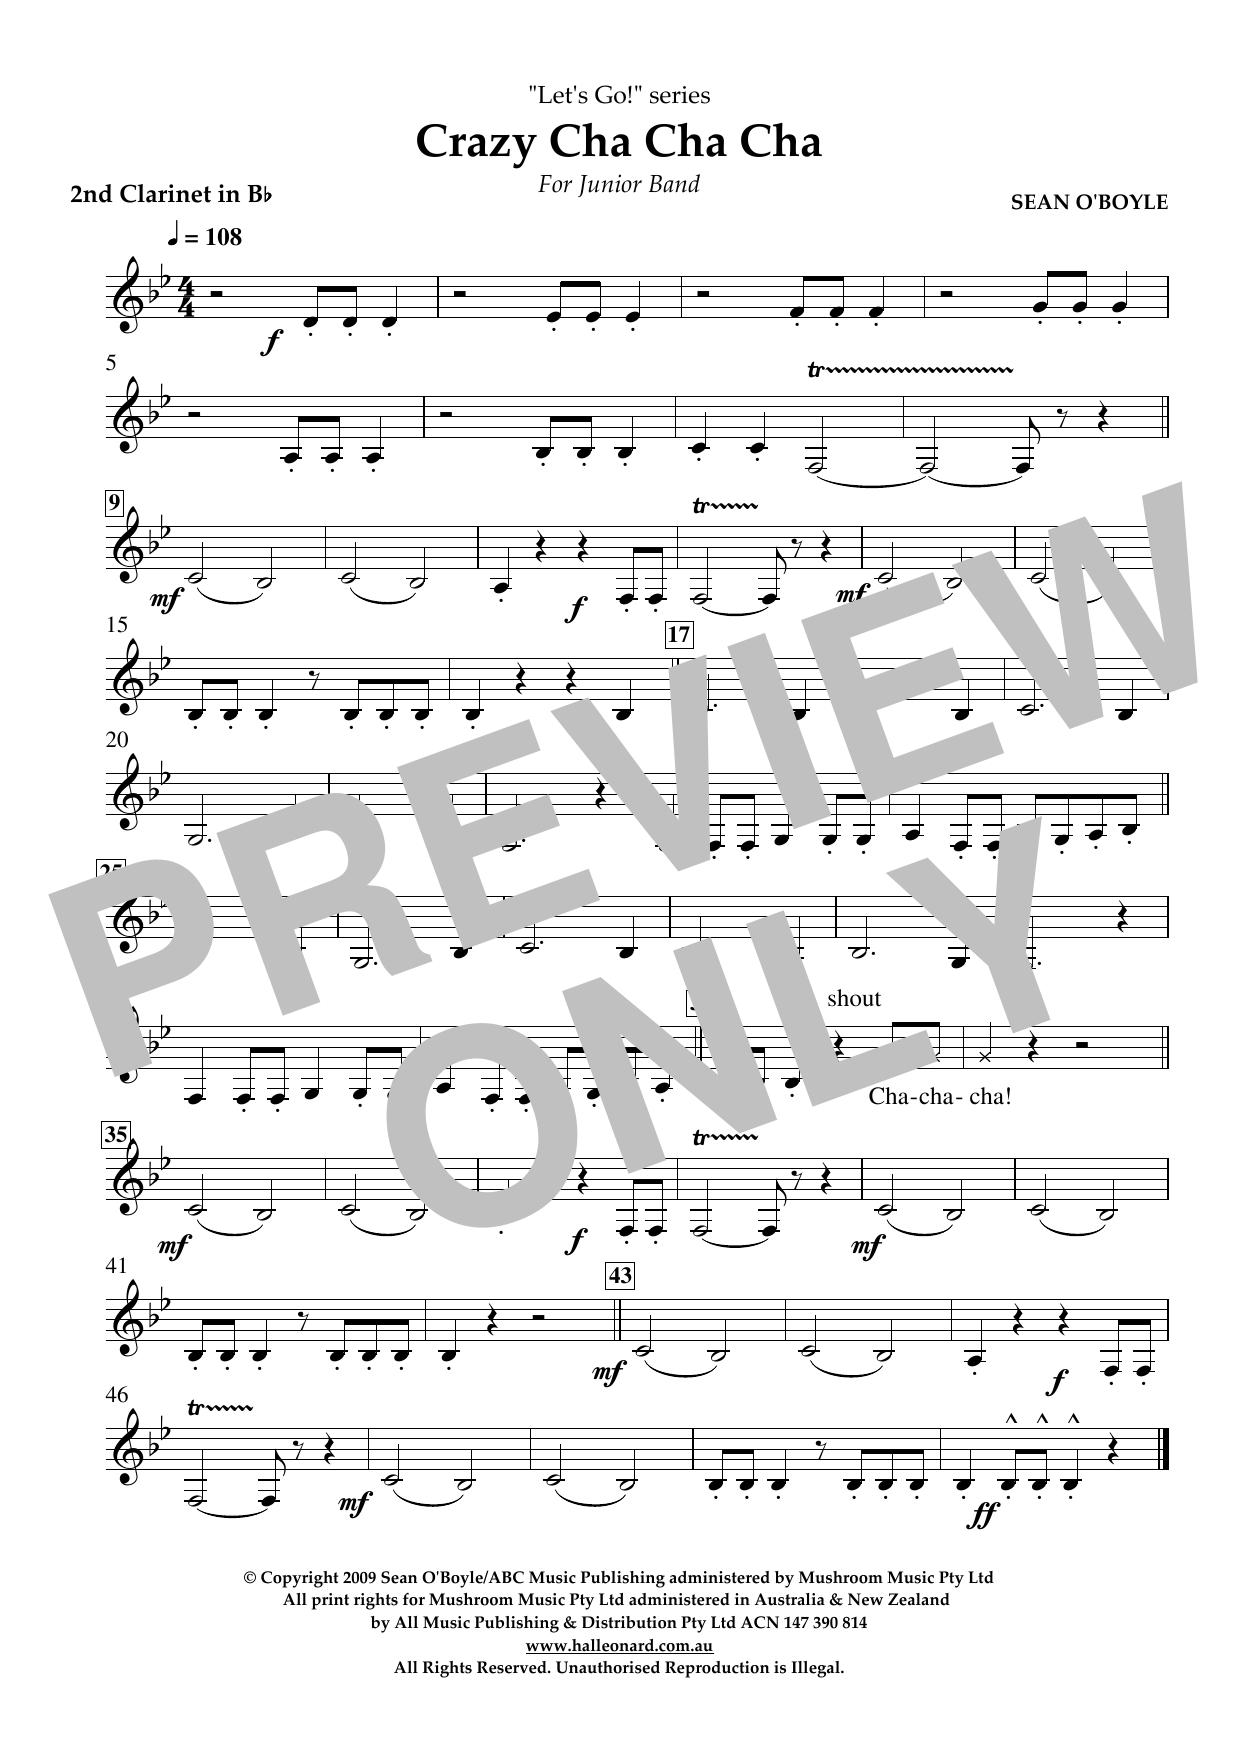 Sean O'Boyle Crazy Cha Cha Cha - Bb Clarinet 2 Sheet Music Notes & Chords for Concert Band - Download or Print PDF